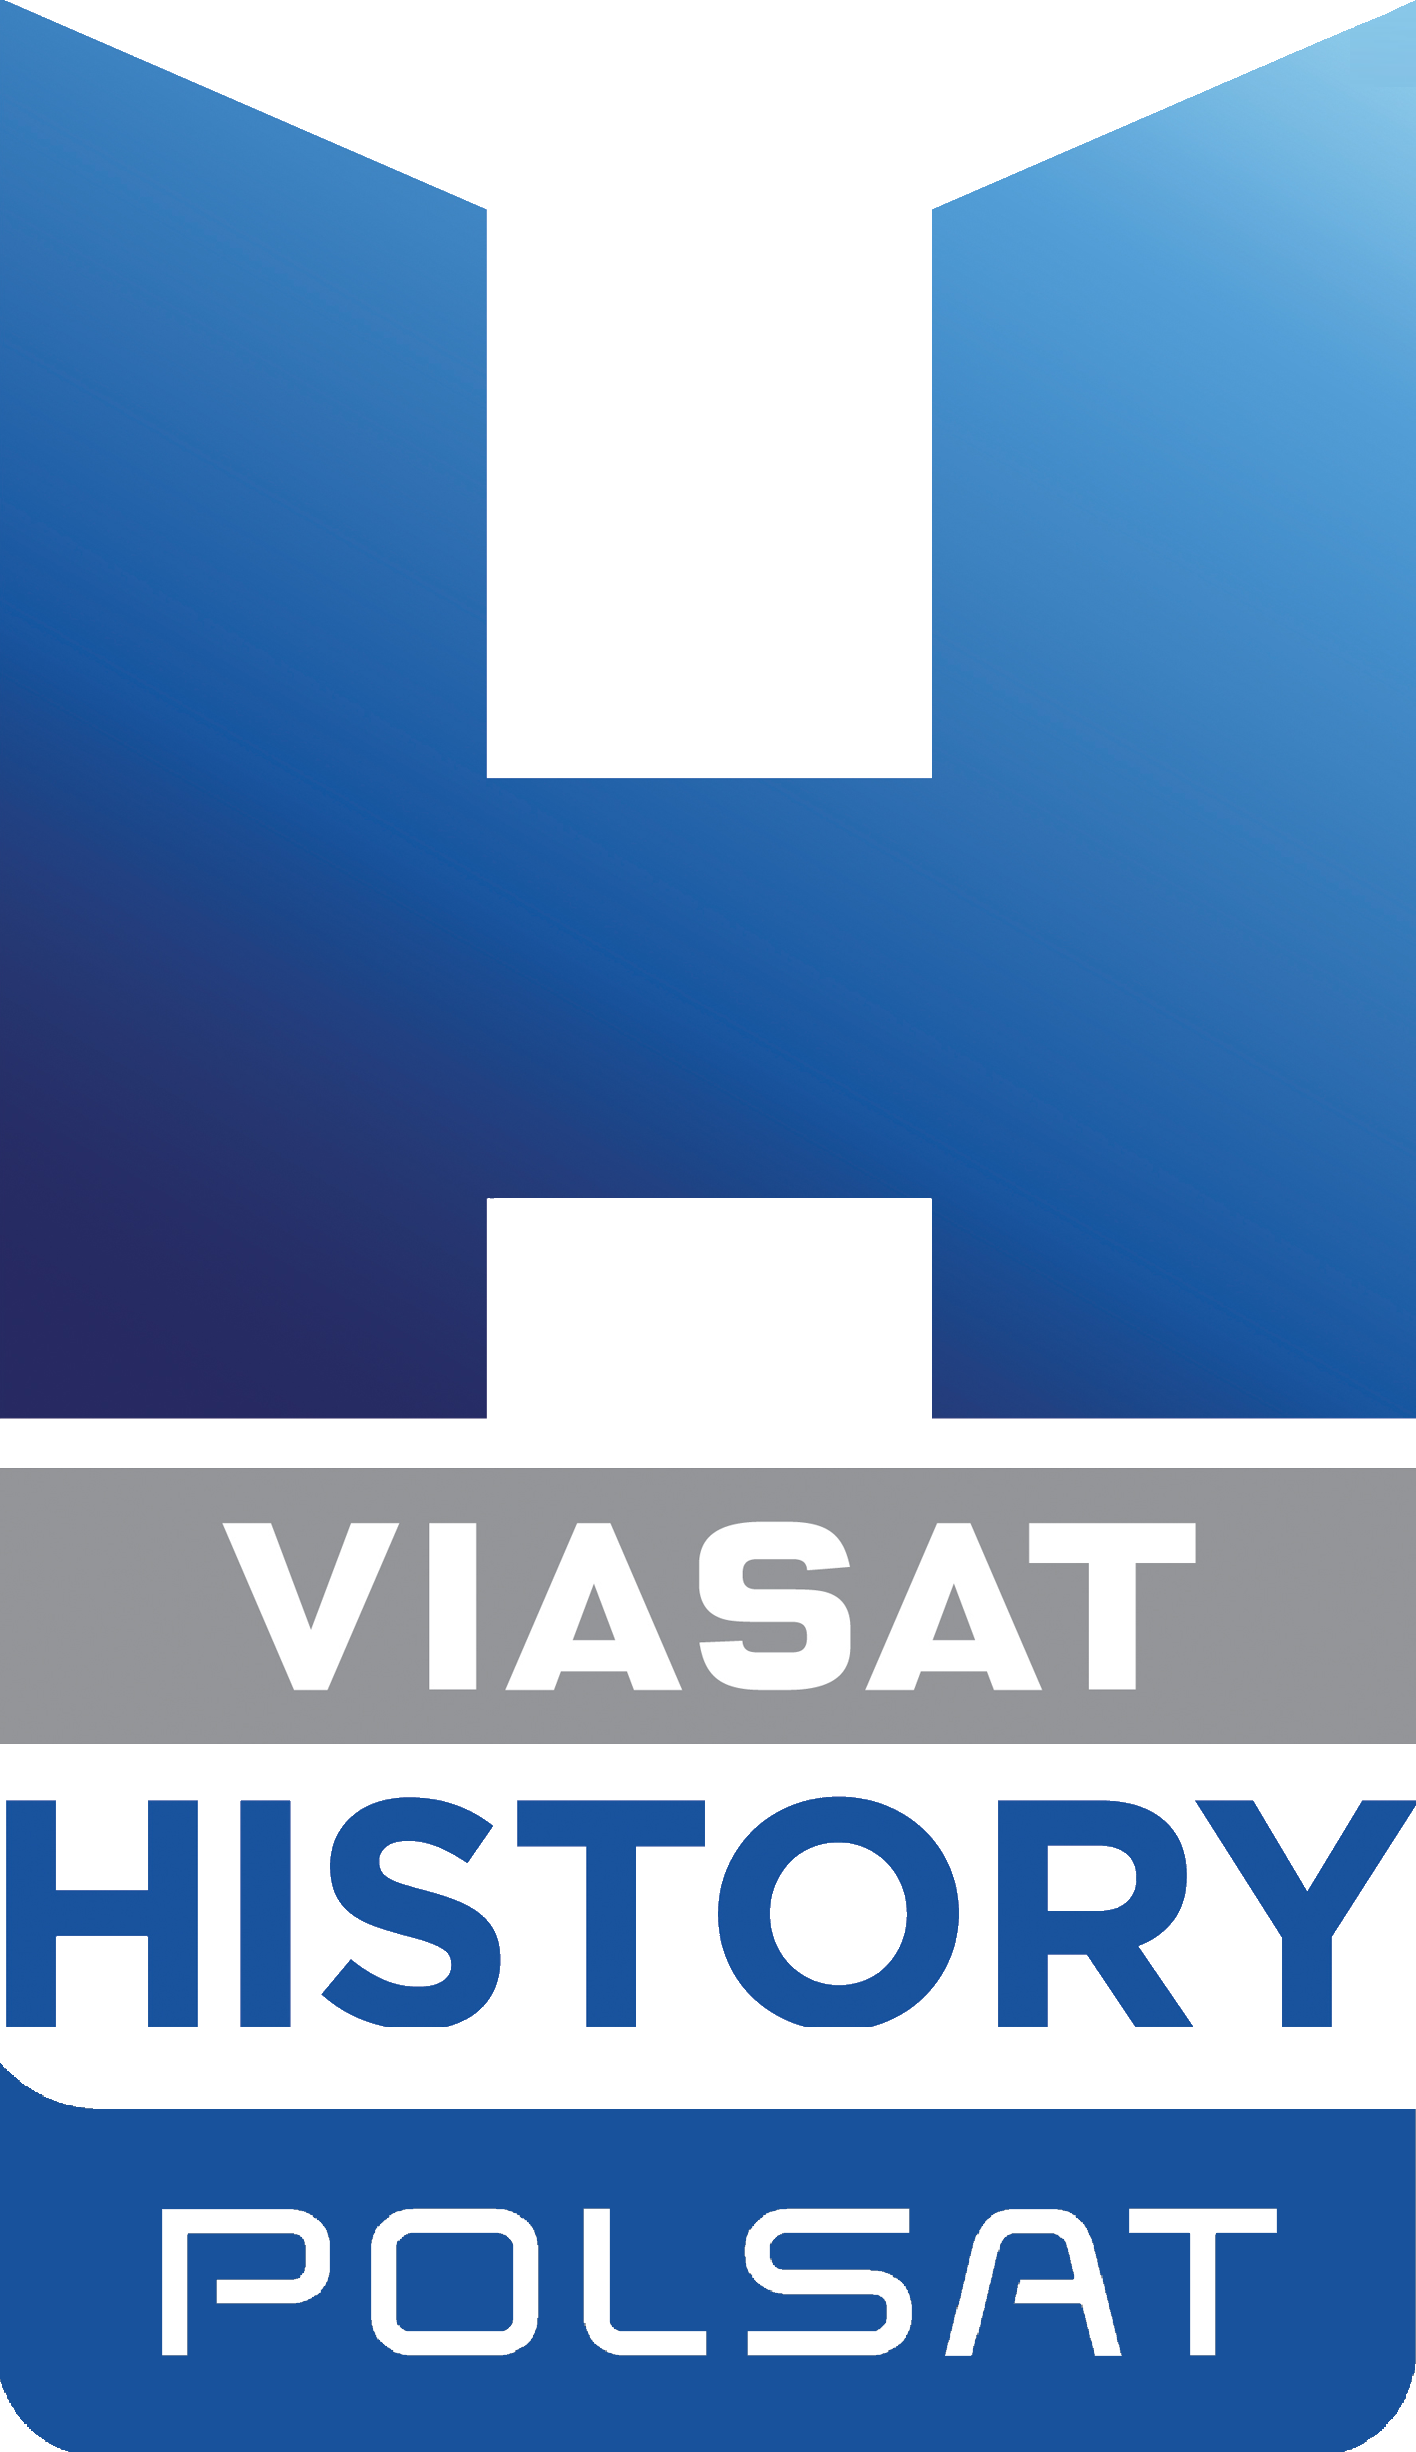 Vedligeholdelse Derfor krave Polsat Viasat History | Mihsign Vision | Fandom